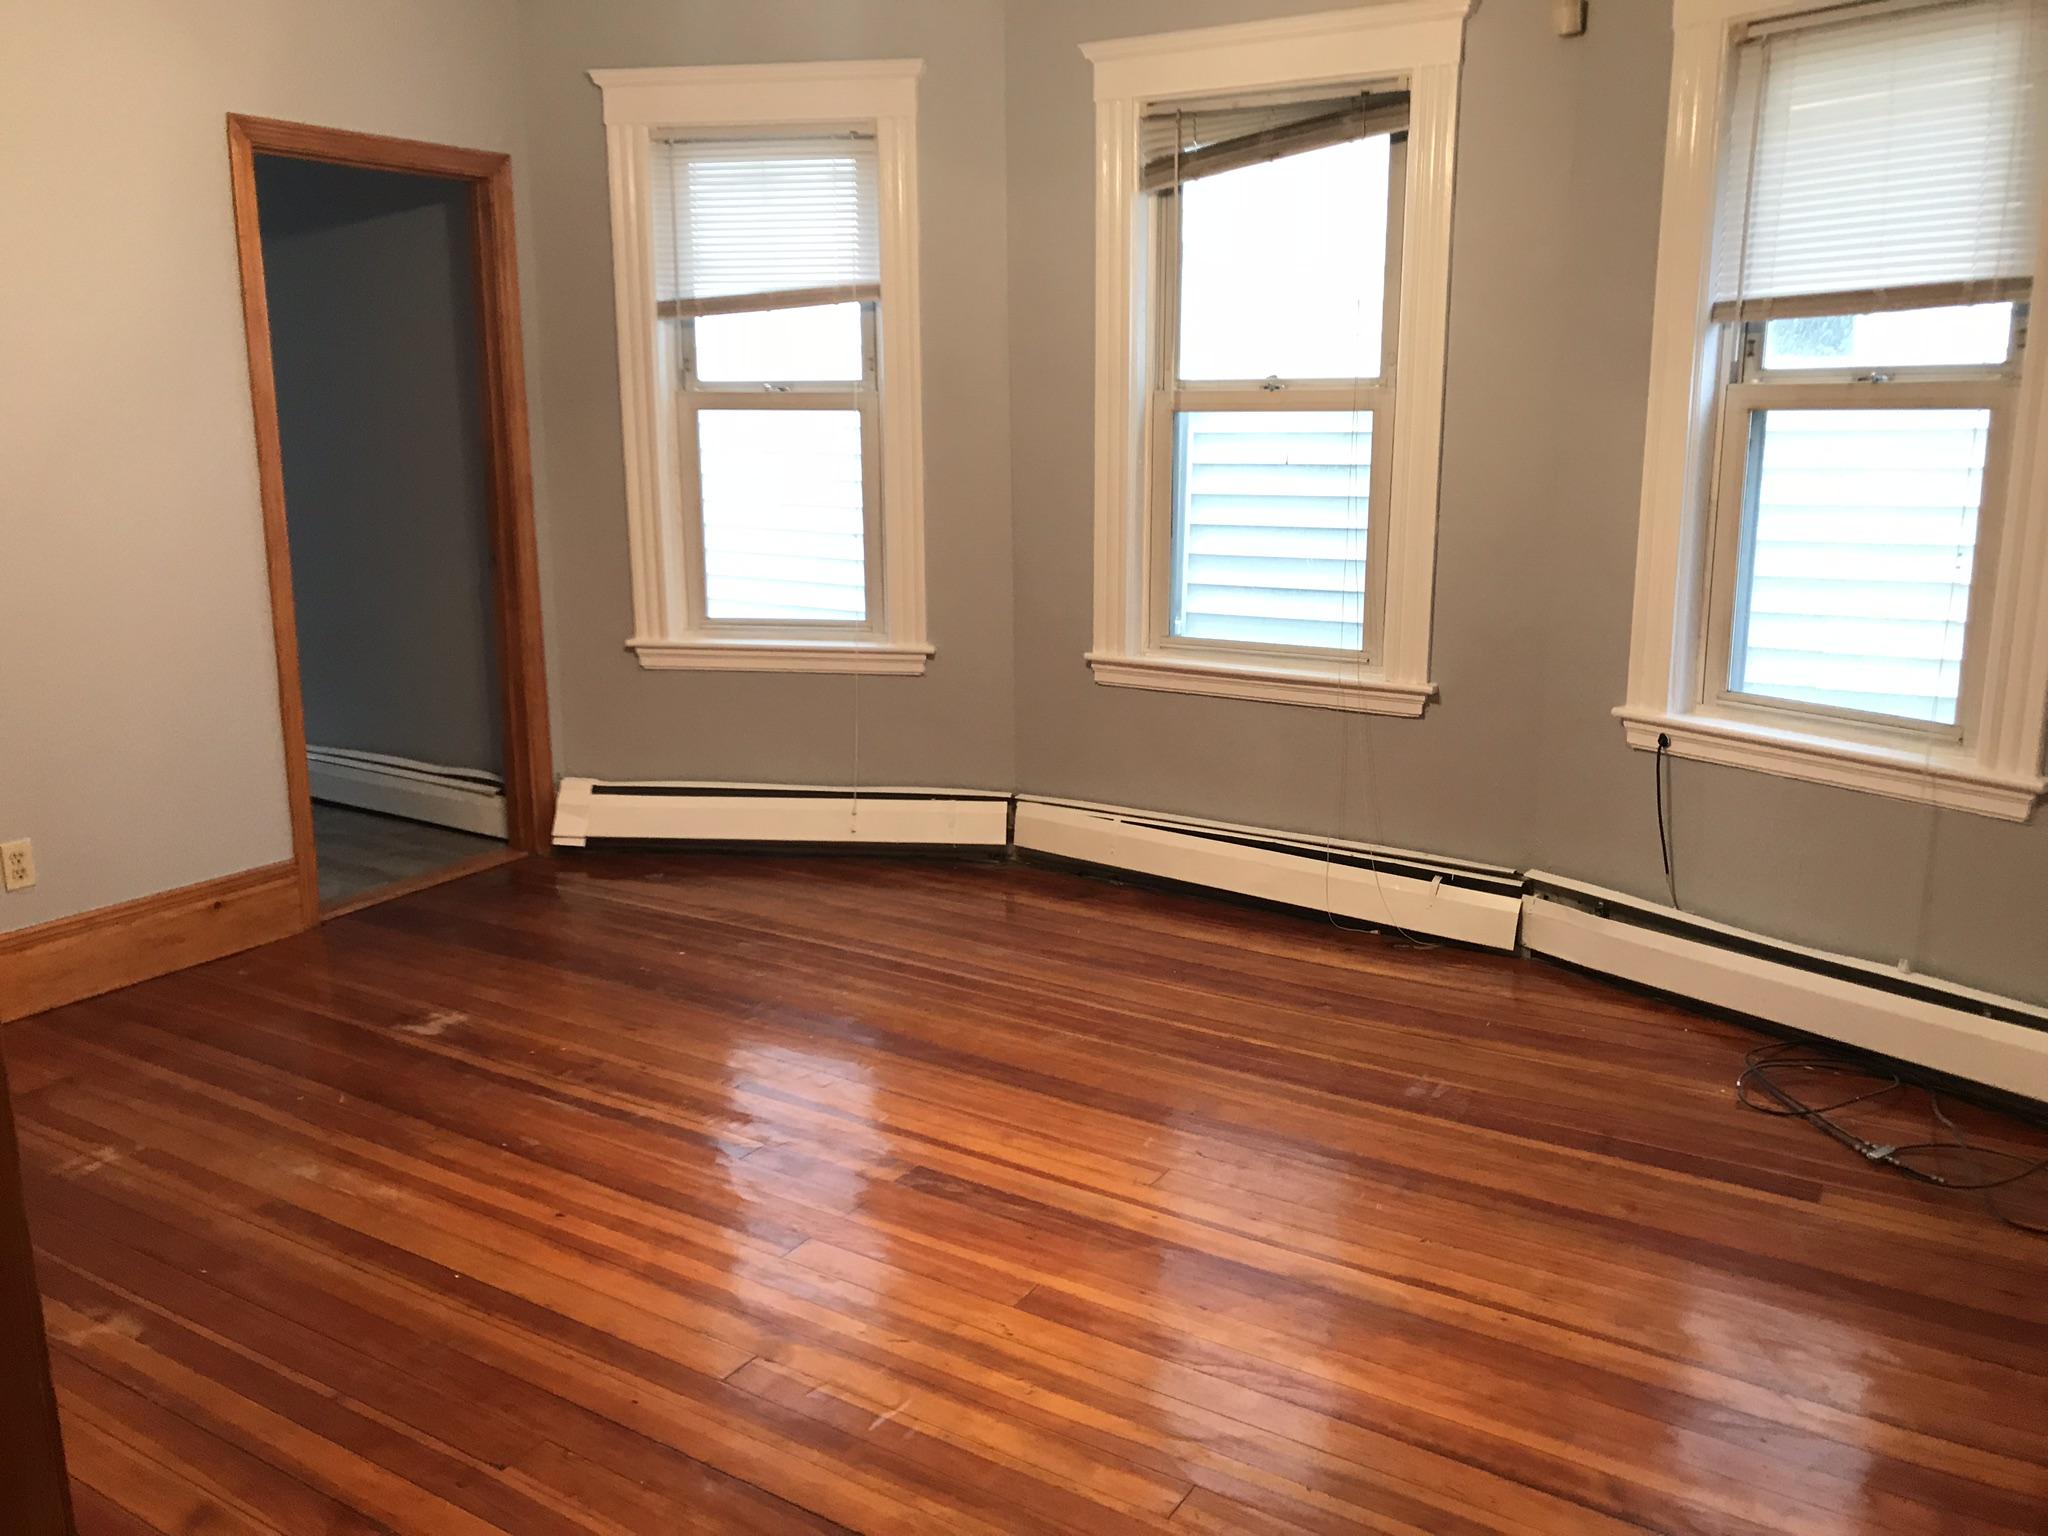 Photos of apartment on Dunlap St.,Boston MA 02124